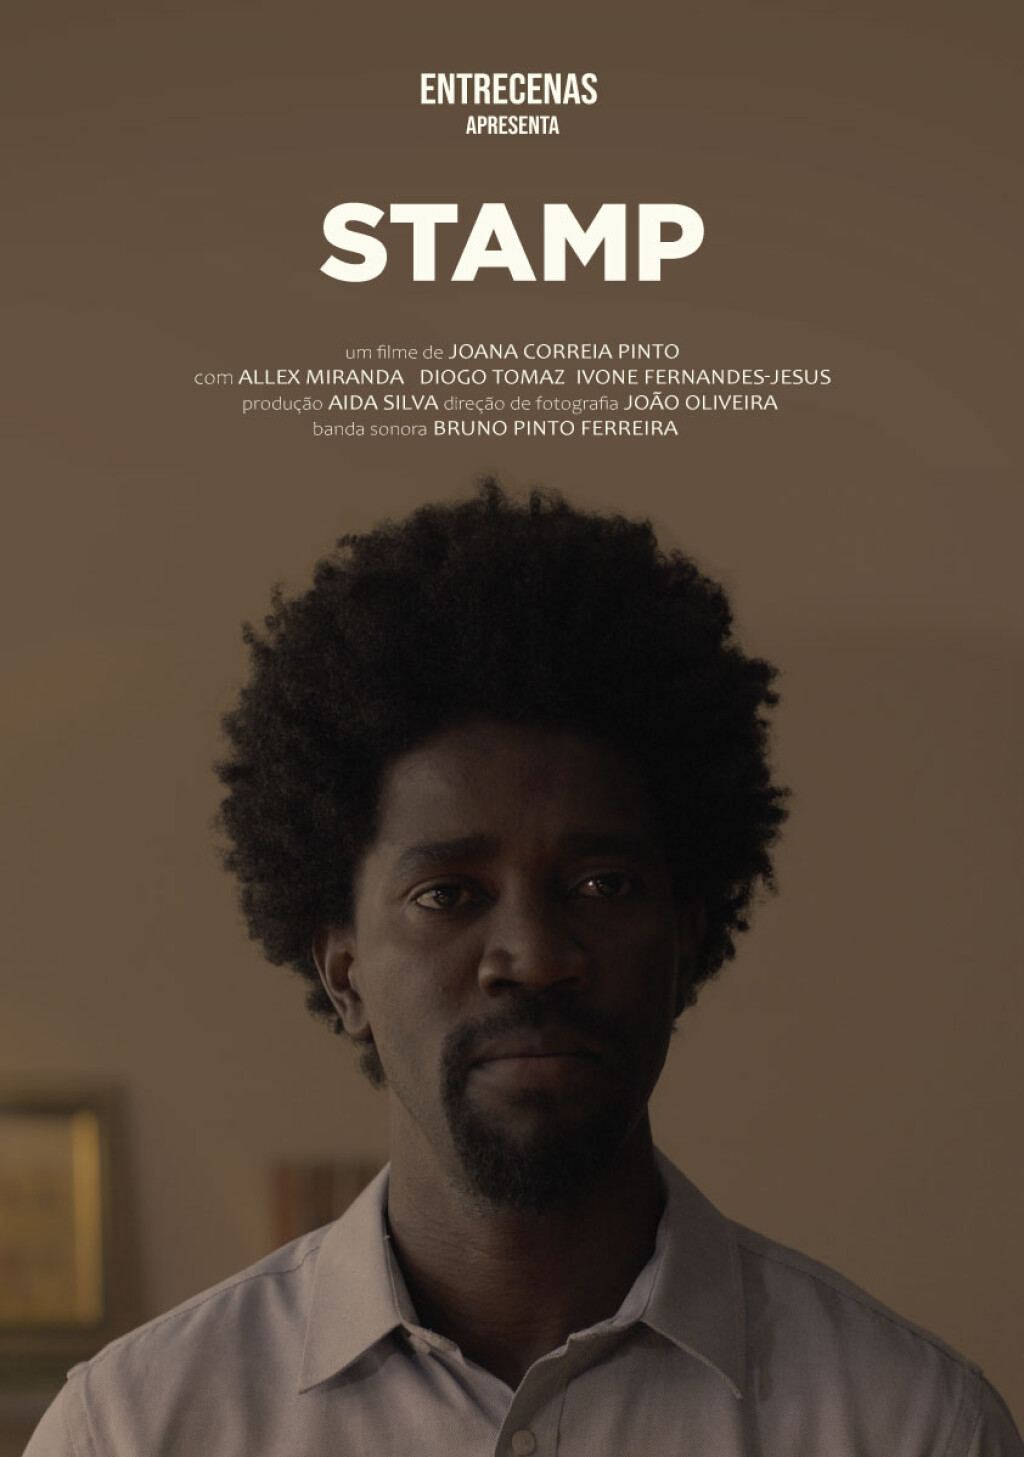 Filmposter for Stamp